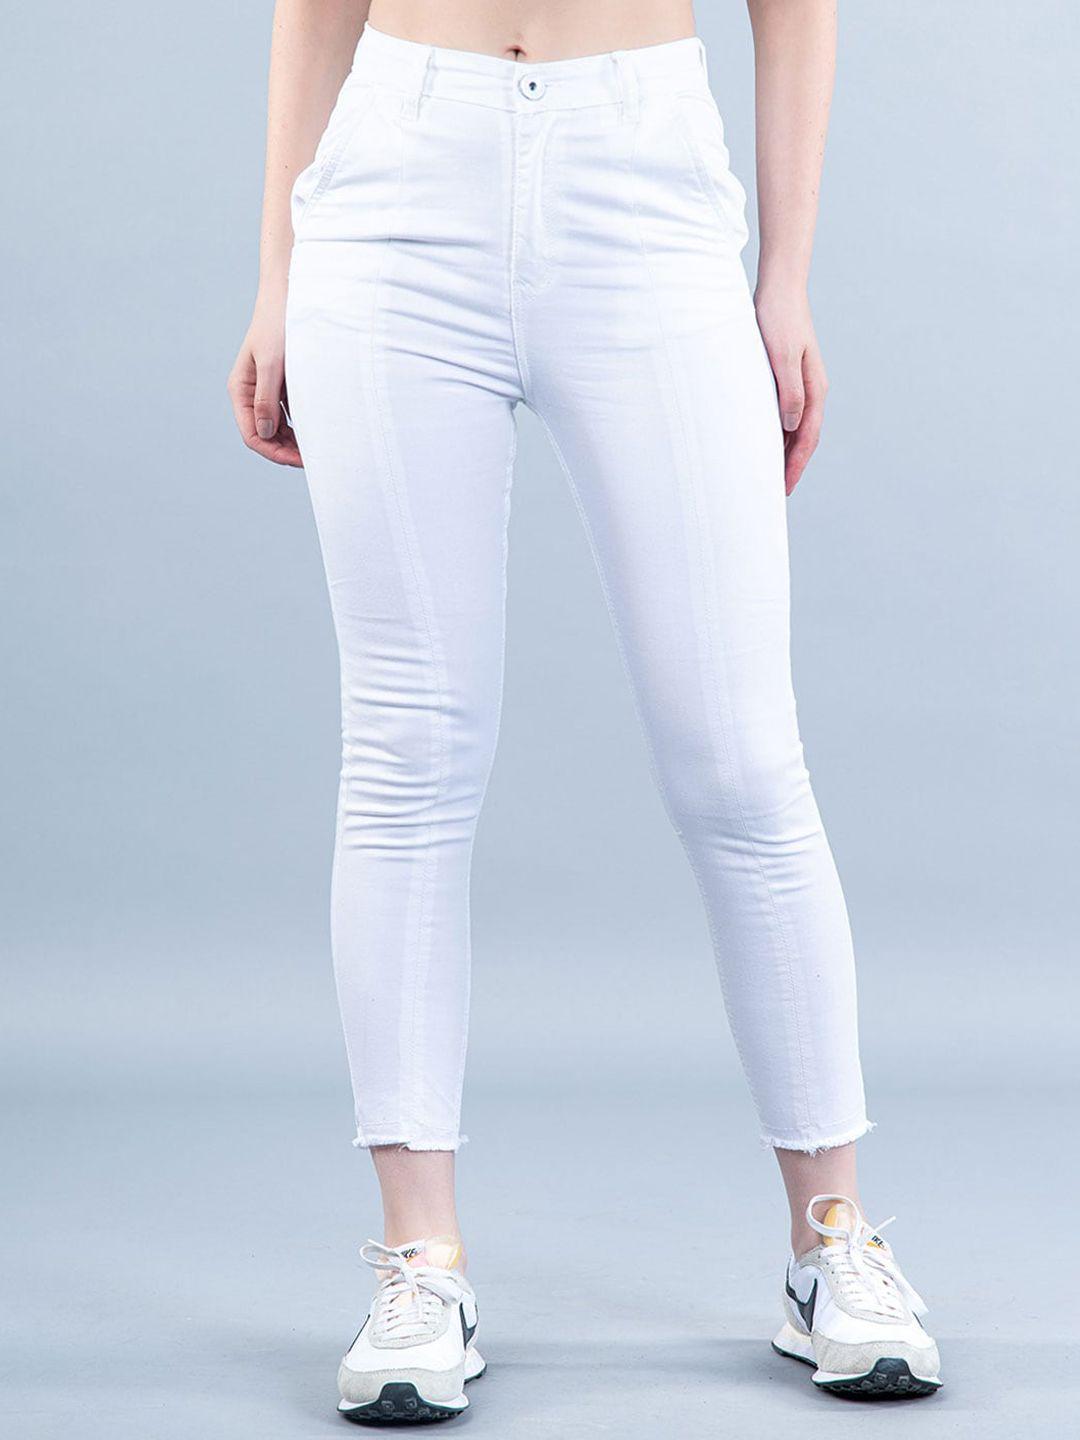 tistabene-women-comfort-clean-look-skinny-fit--jeans